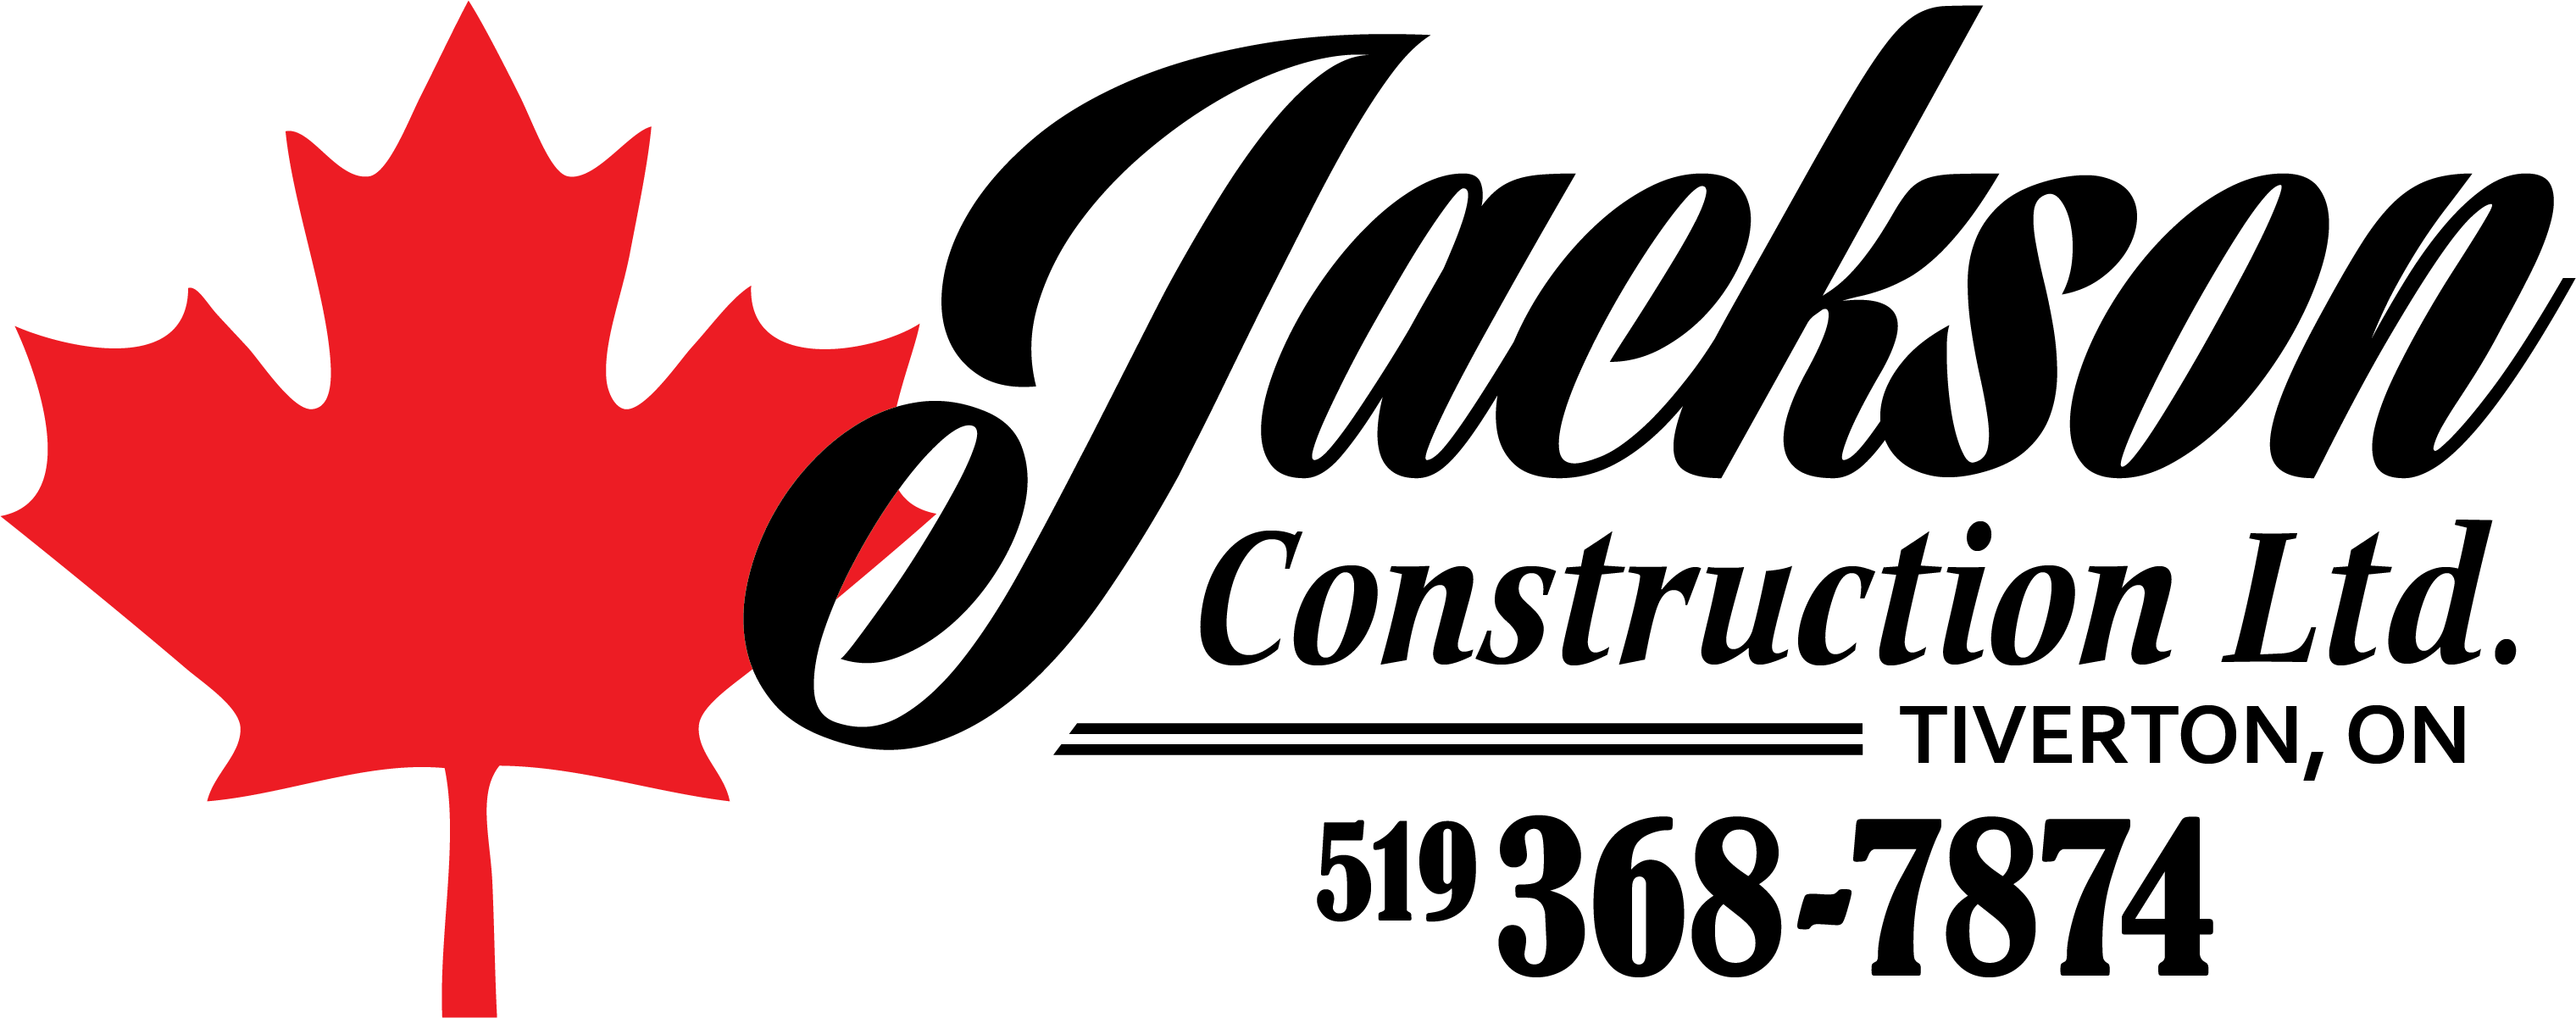 Jackson Construction ltd.